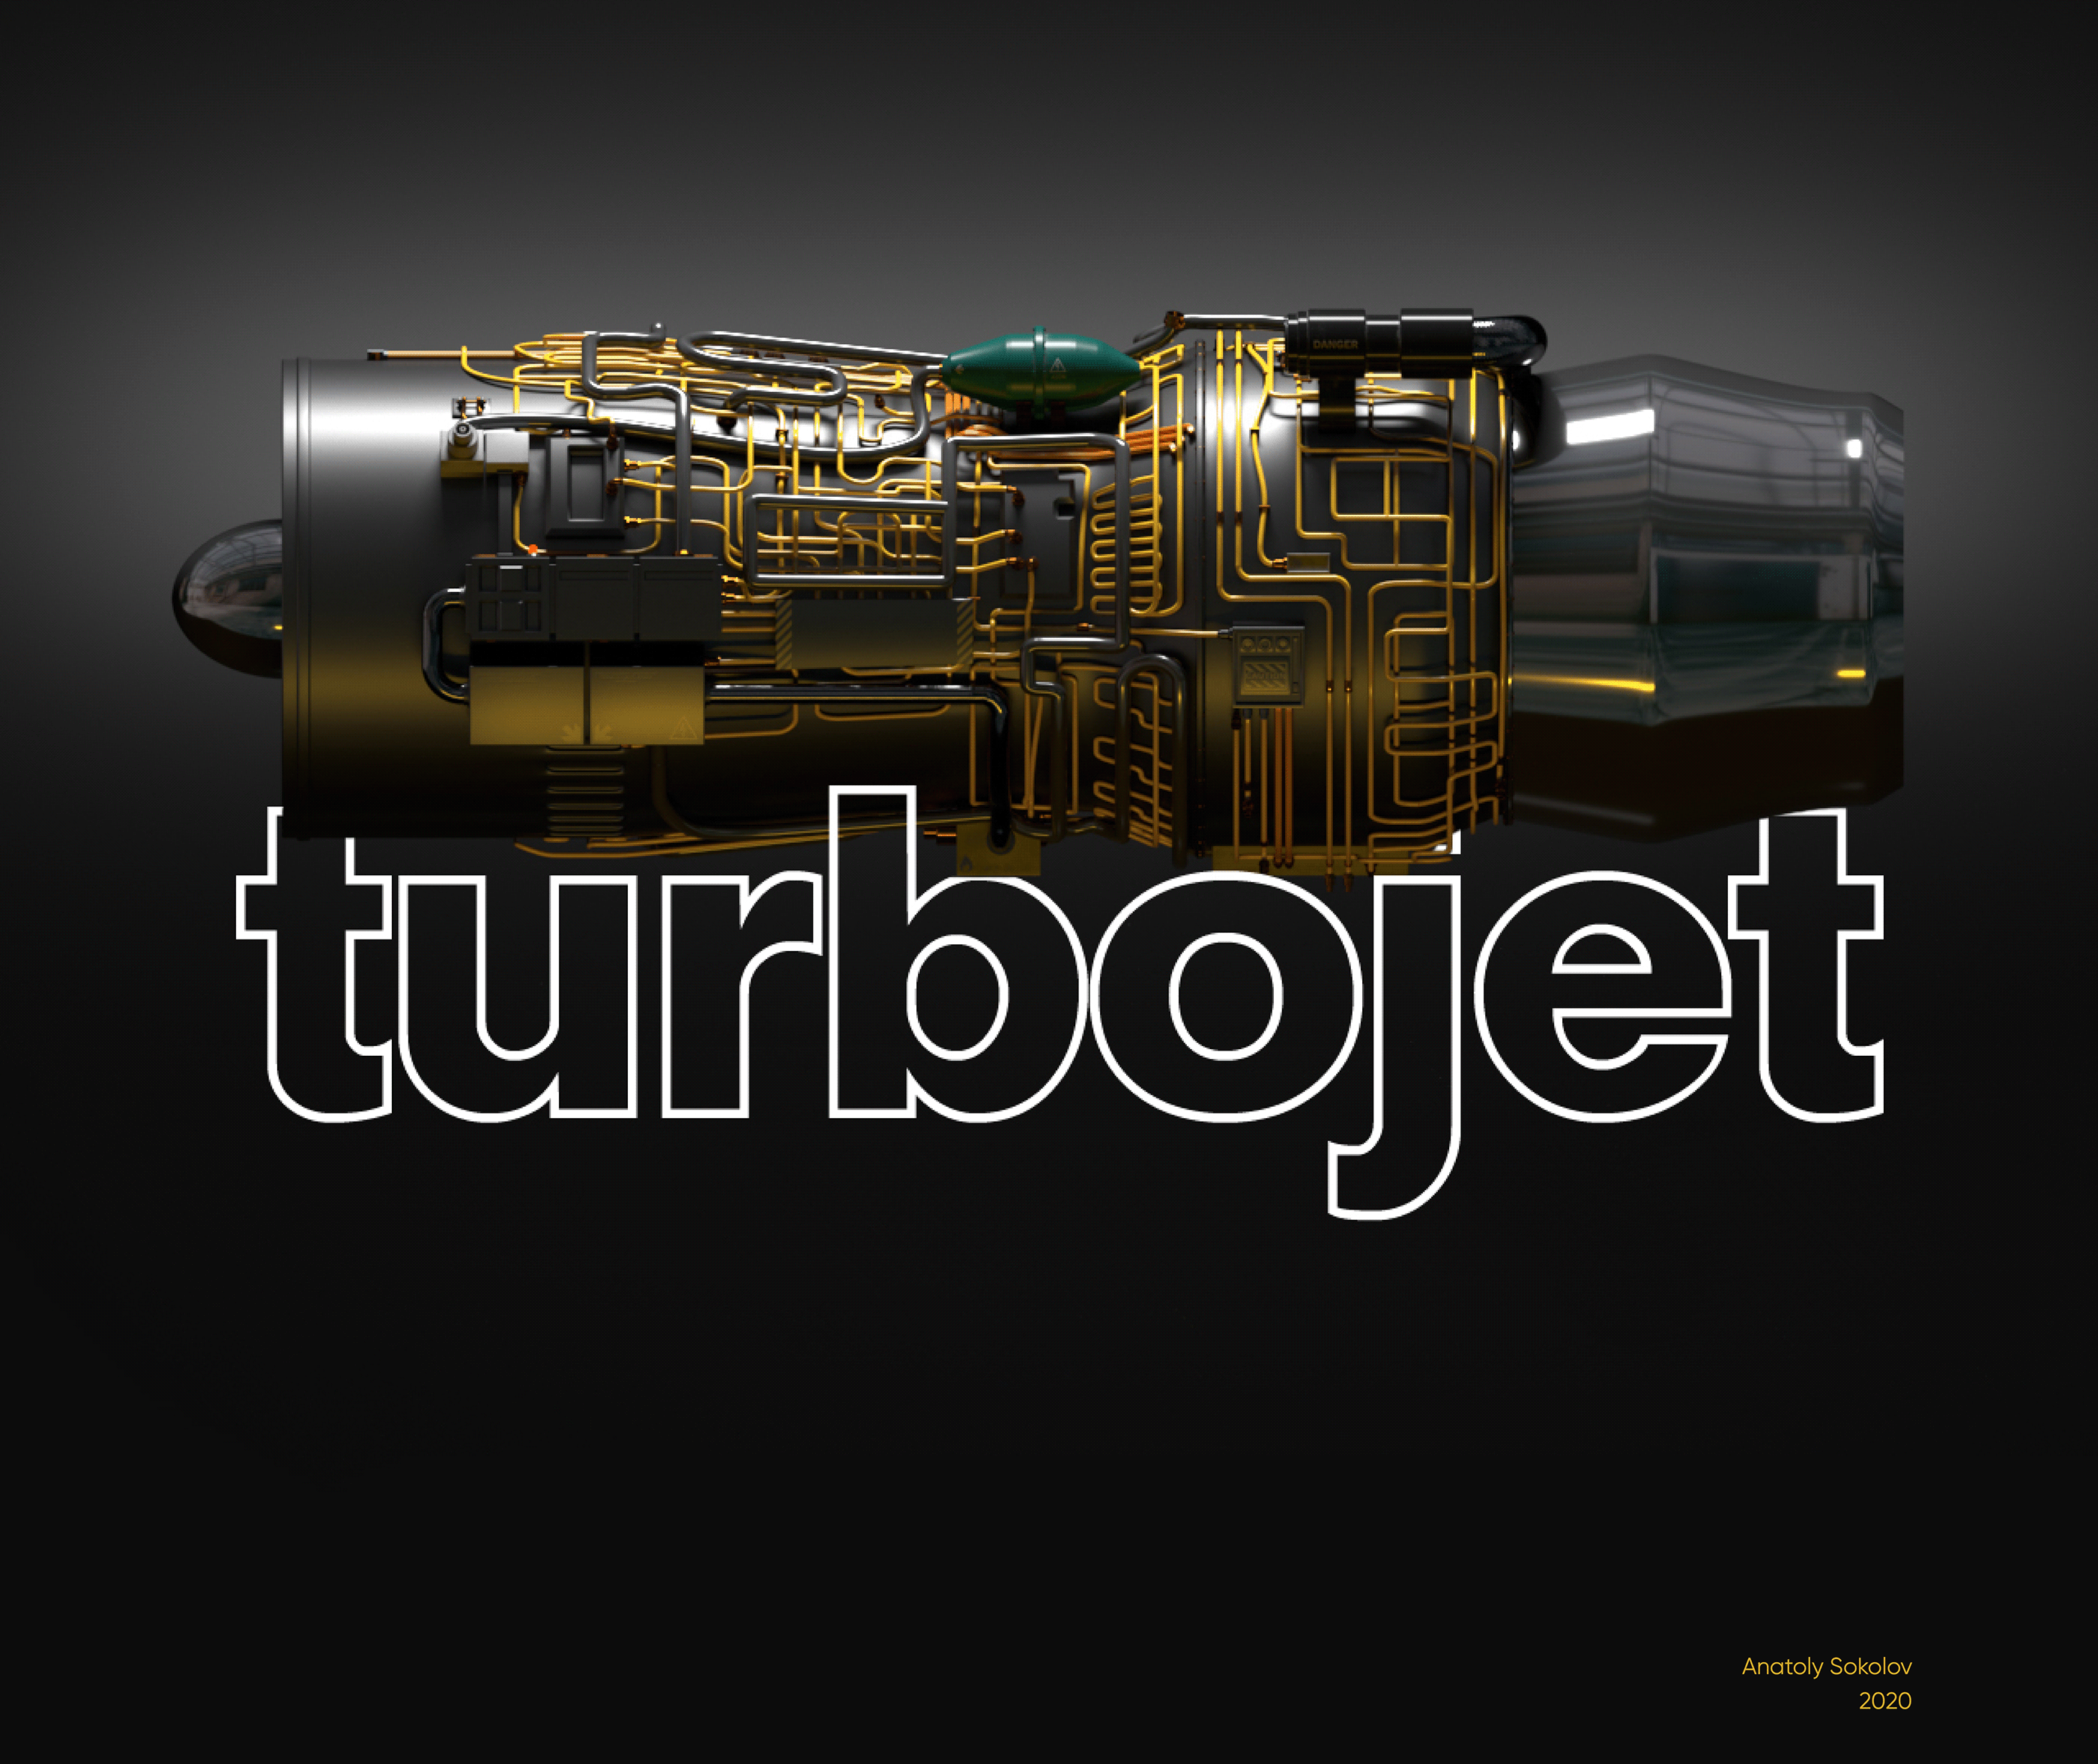 Turbojet on Behance91d32592526029.5e4d6229df419.png